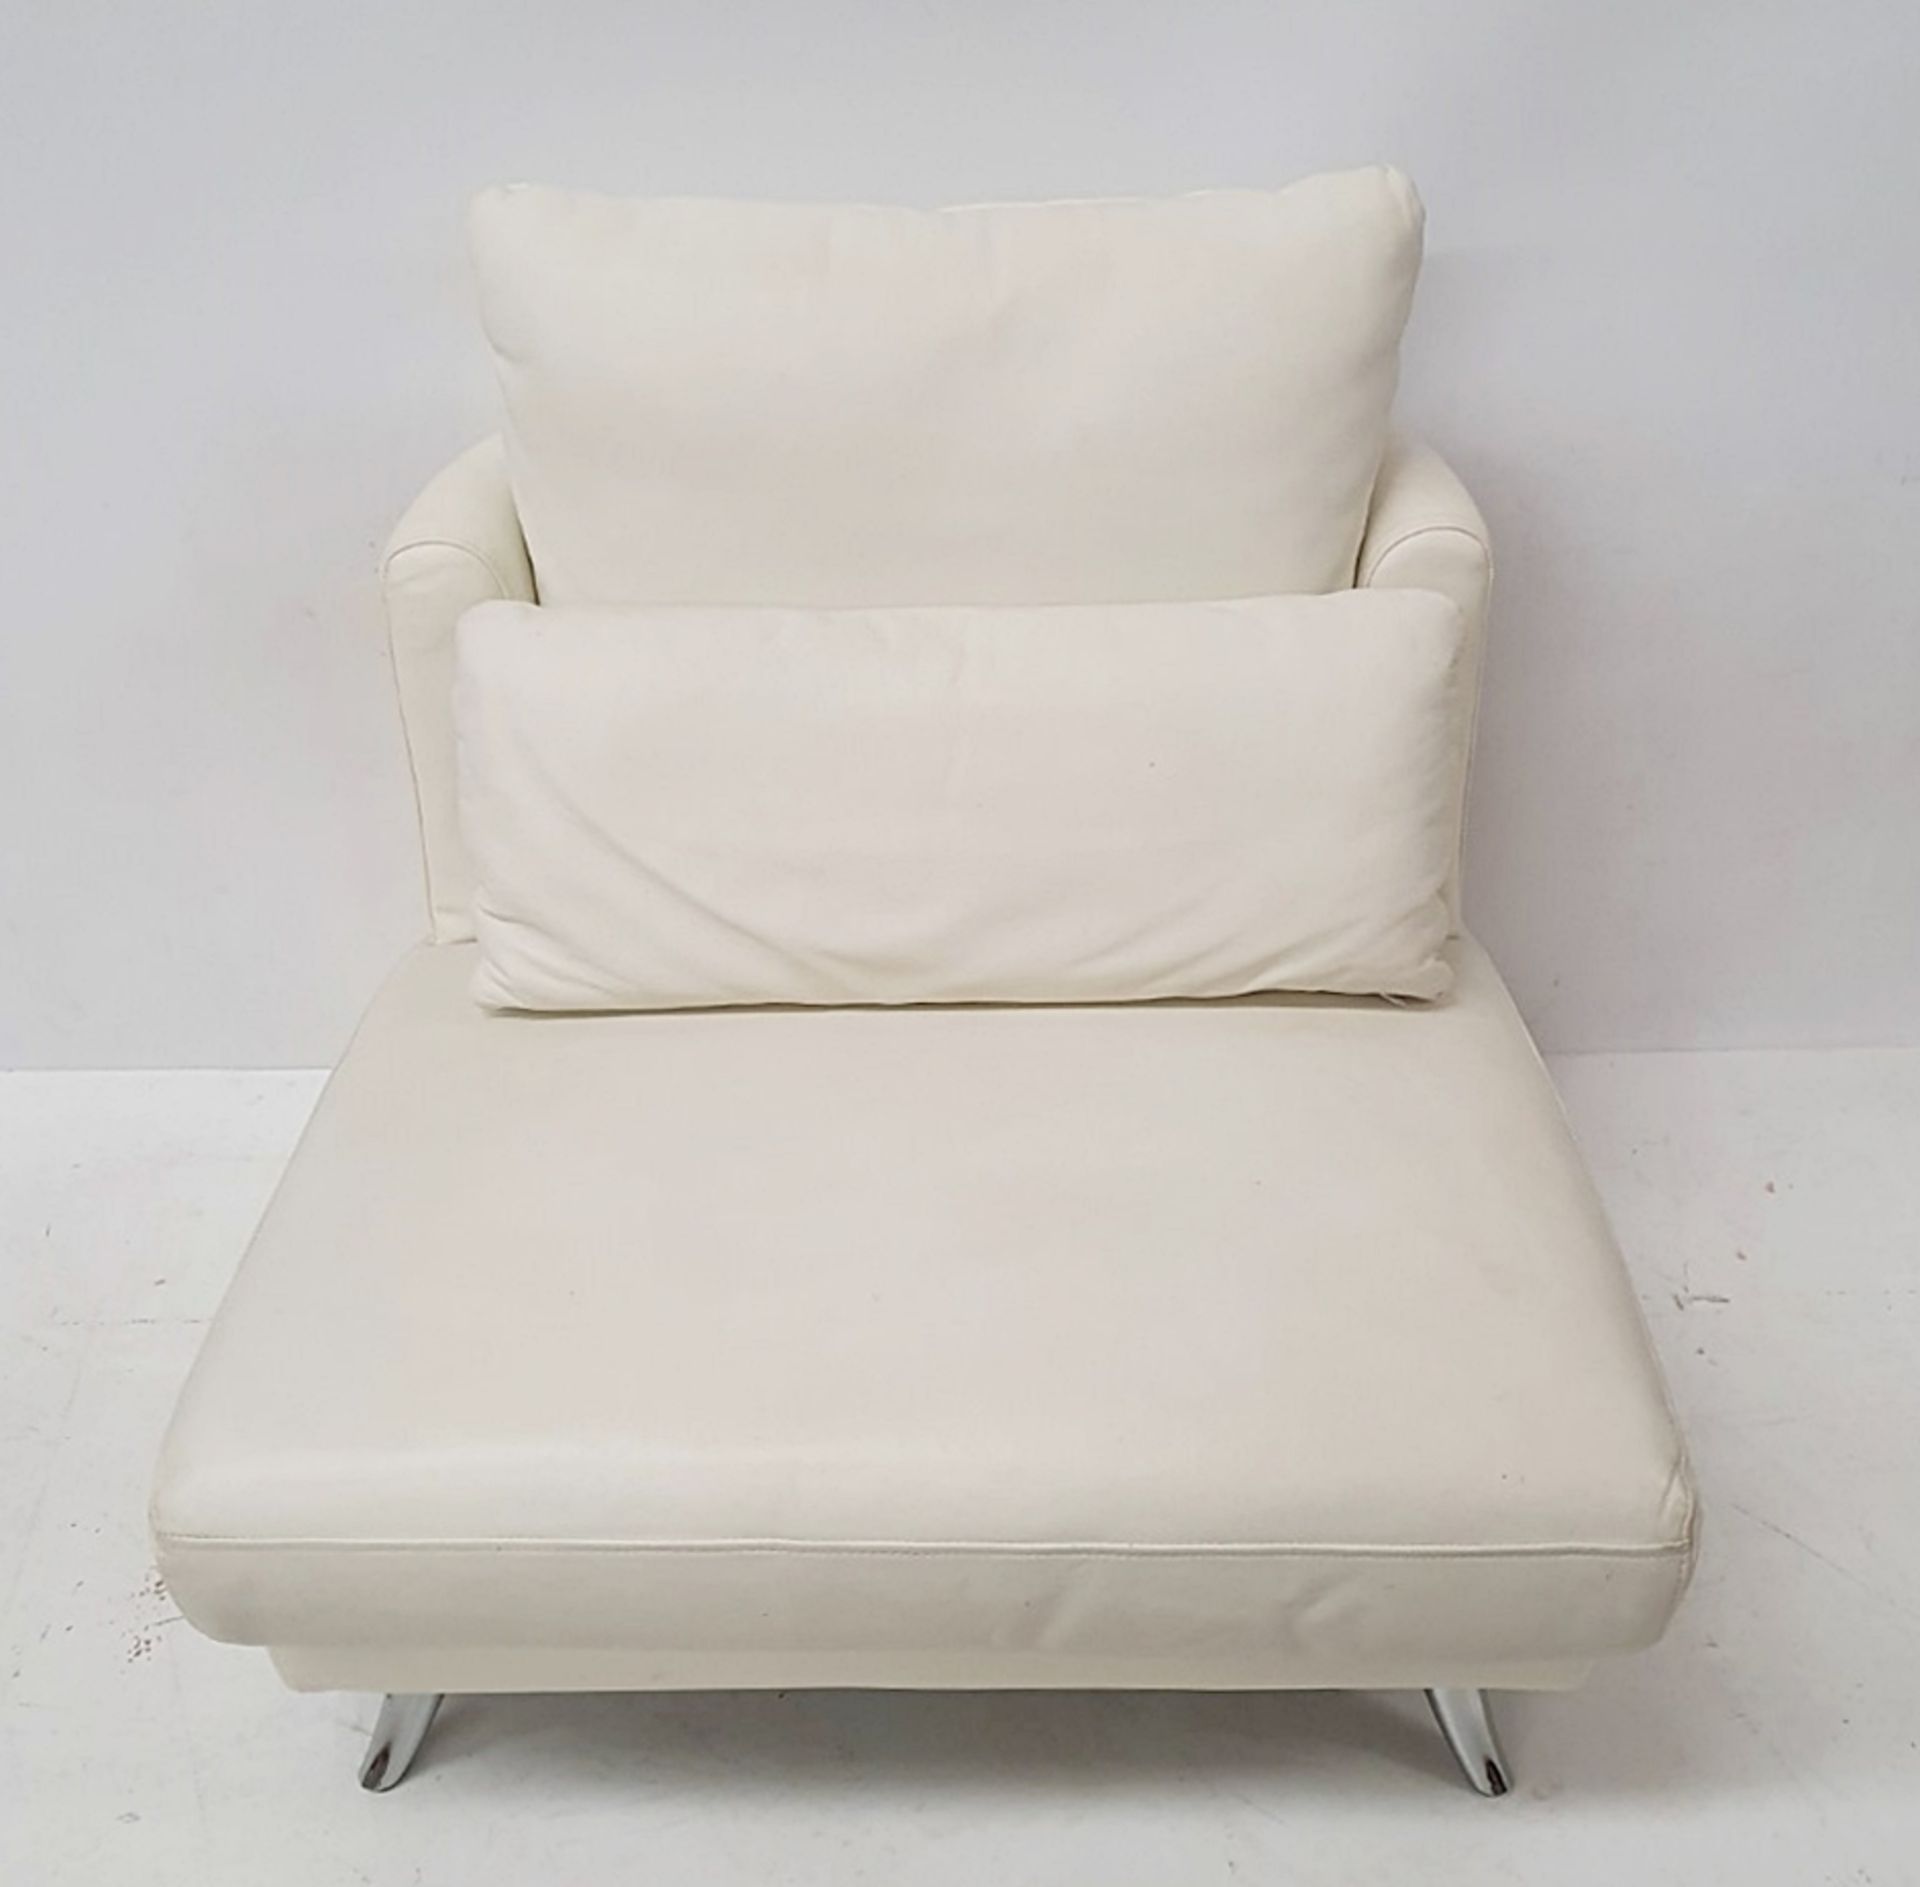 1 x Leather Lounge Chair in Cream - CL380 - Ref: H580 - Location Altrincham WA14 - NO VAT